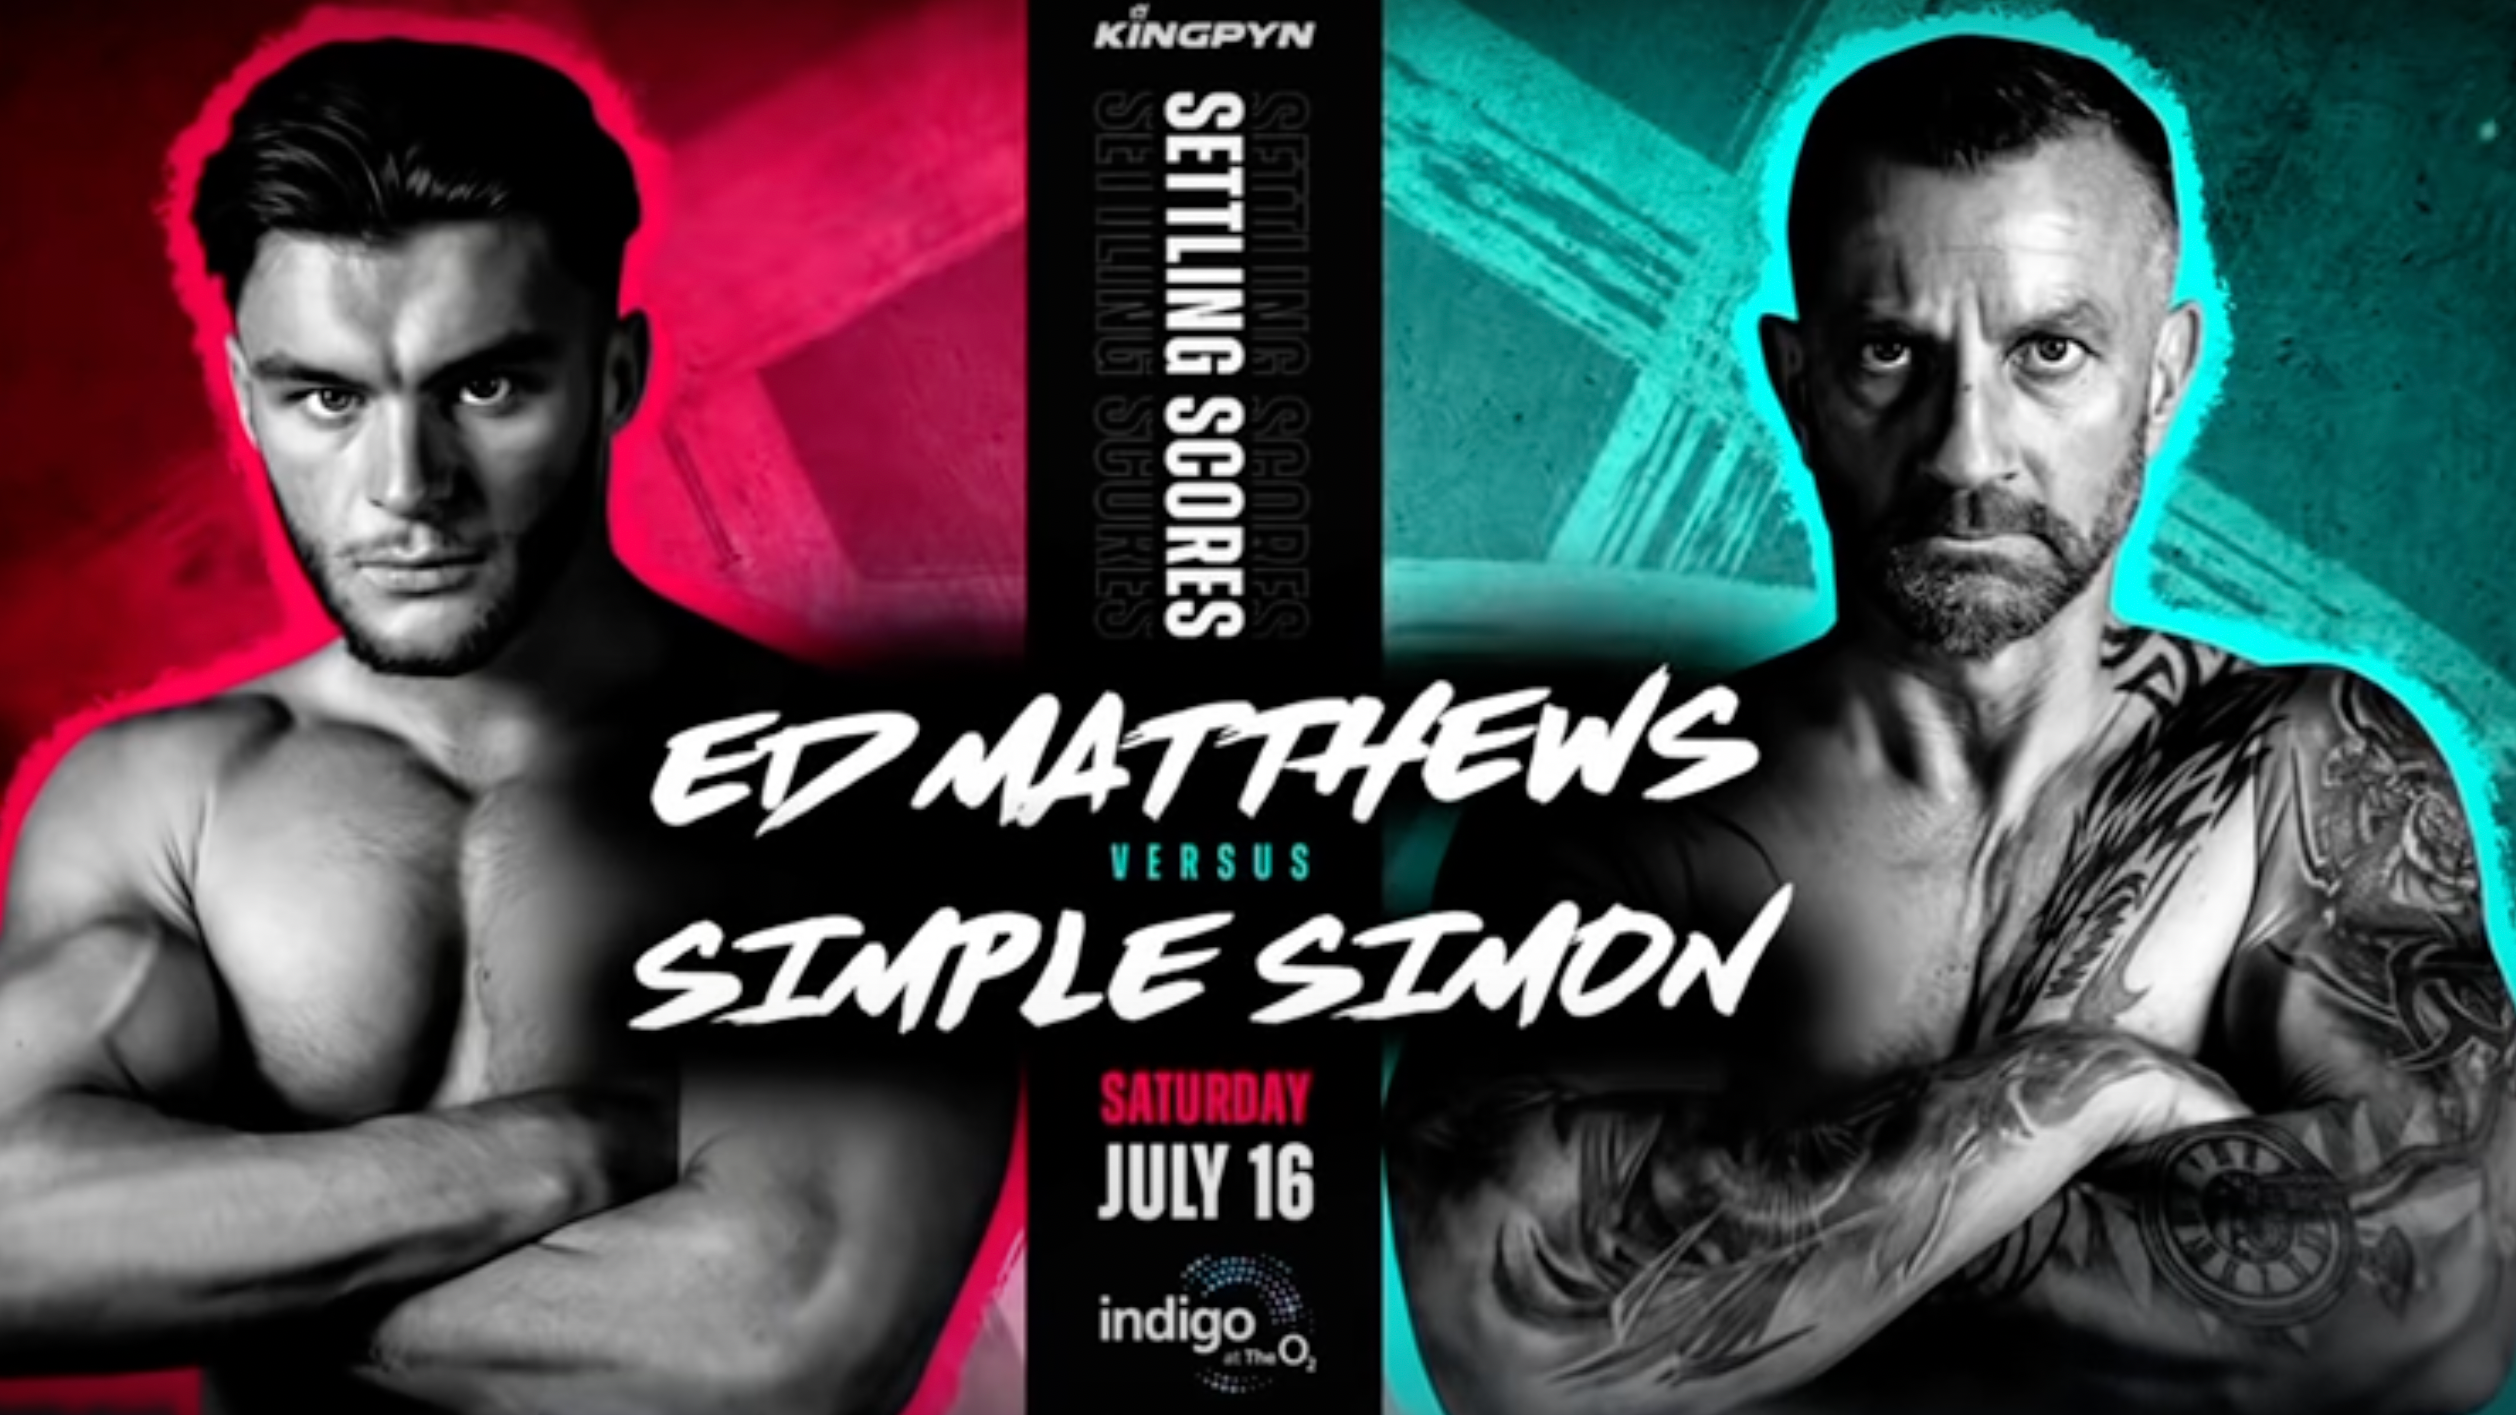 Simple Simon vs Ed Matthews how to watch TikTok fight